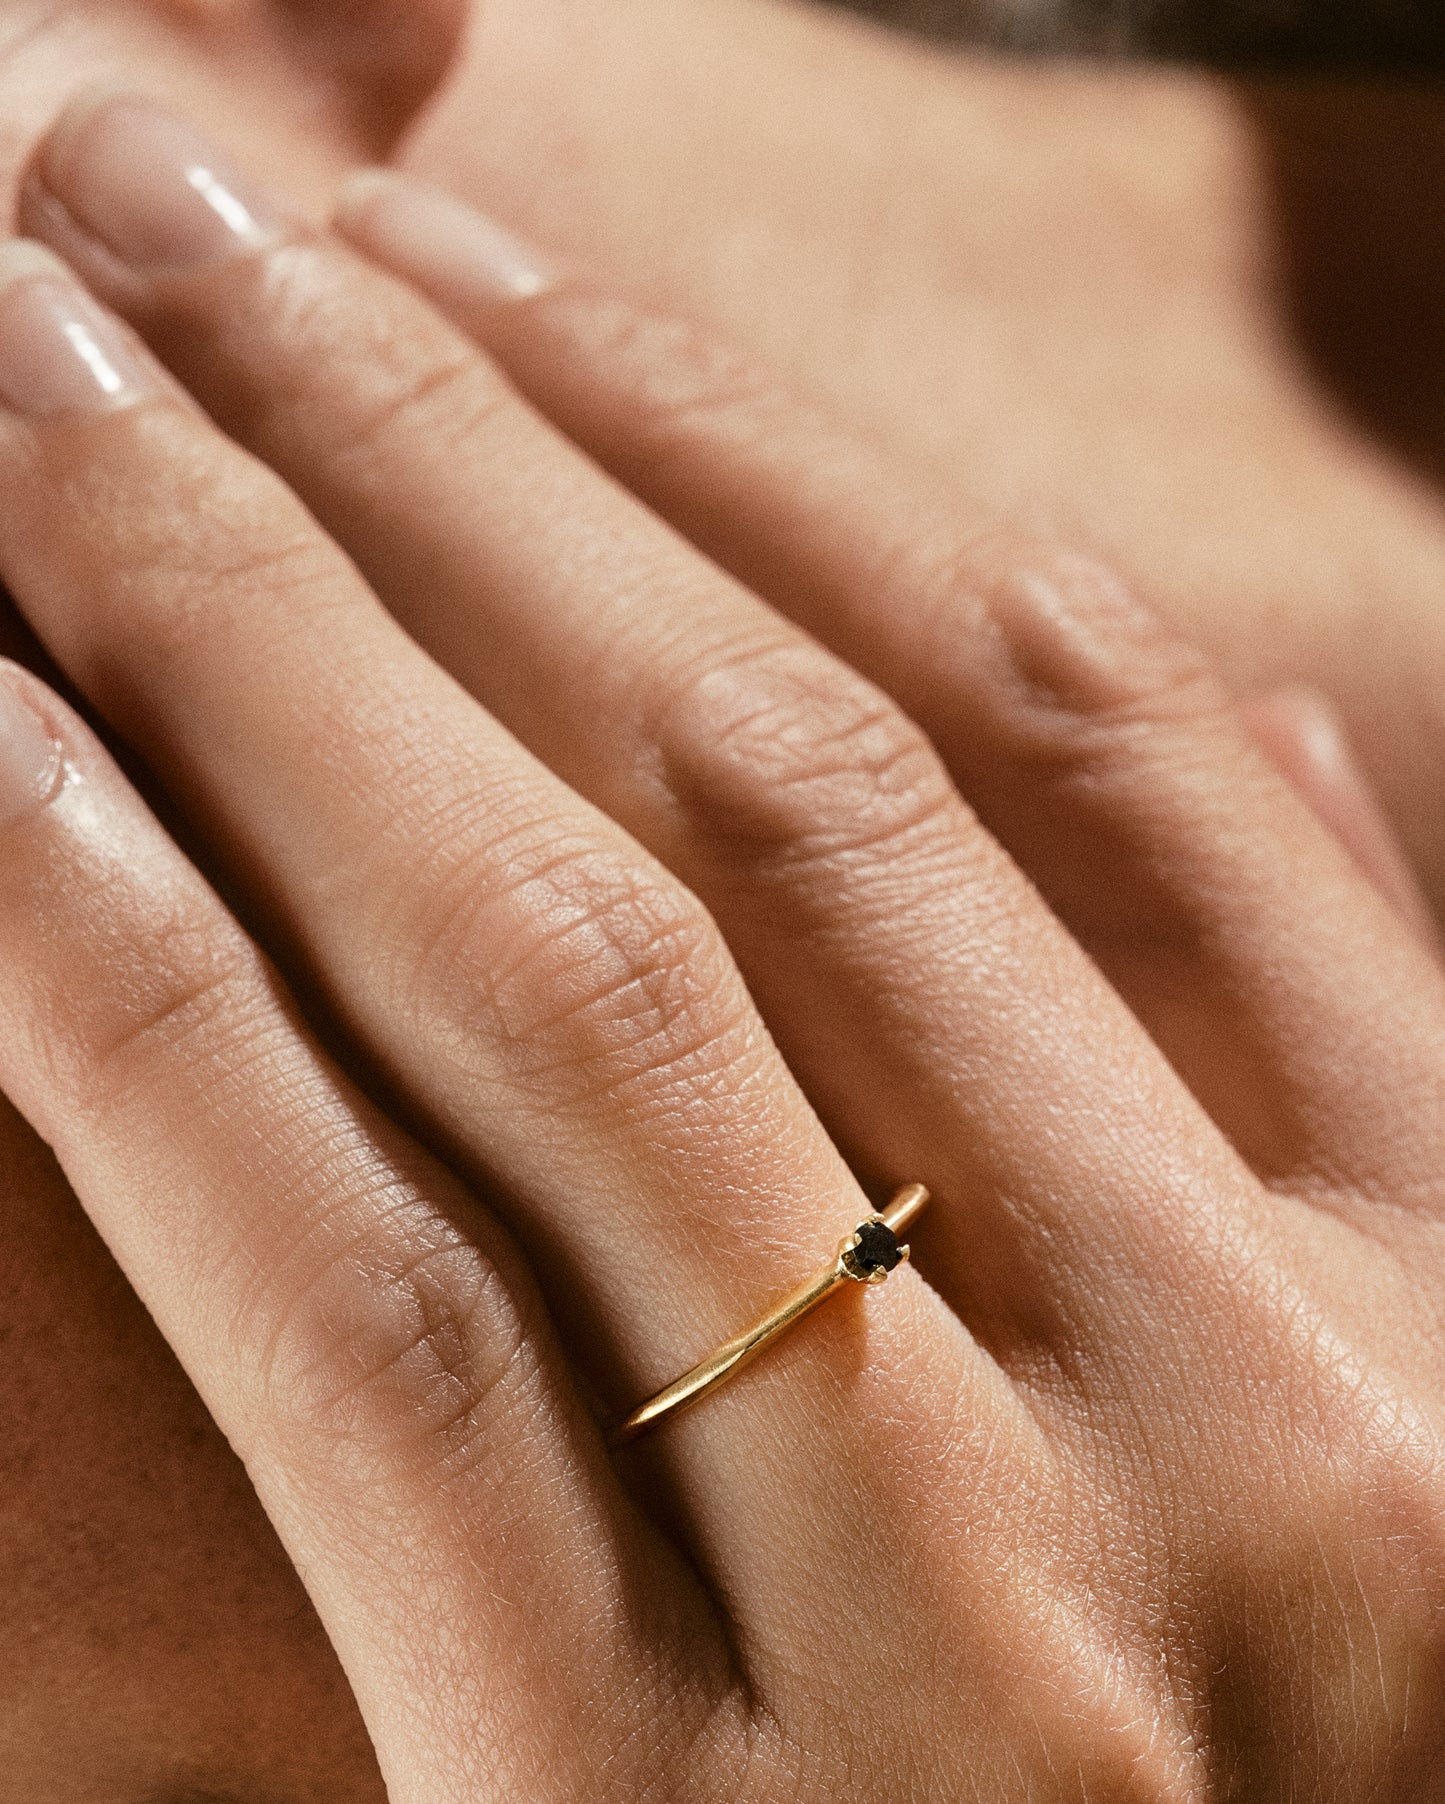 18k fairmined gouden Kaviar ring met klein zwart diamantje